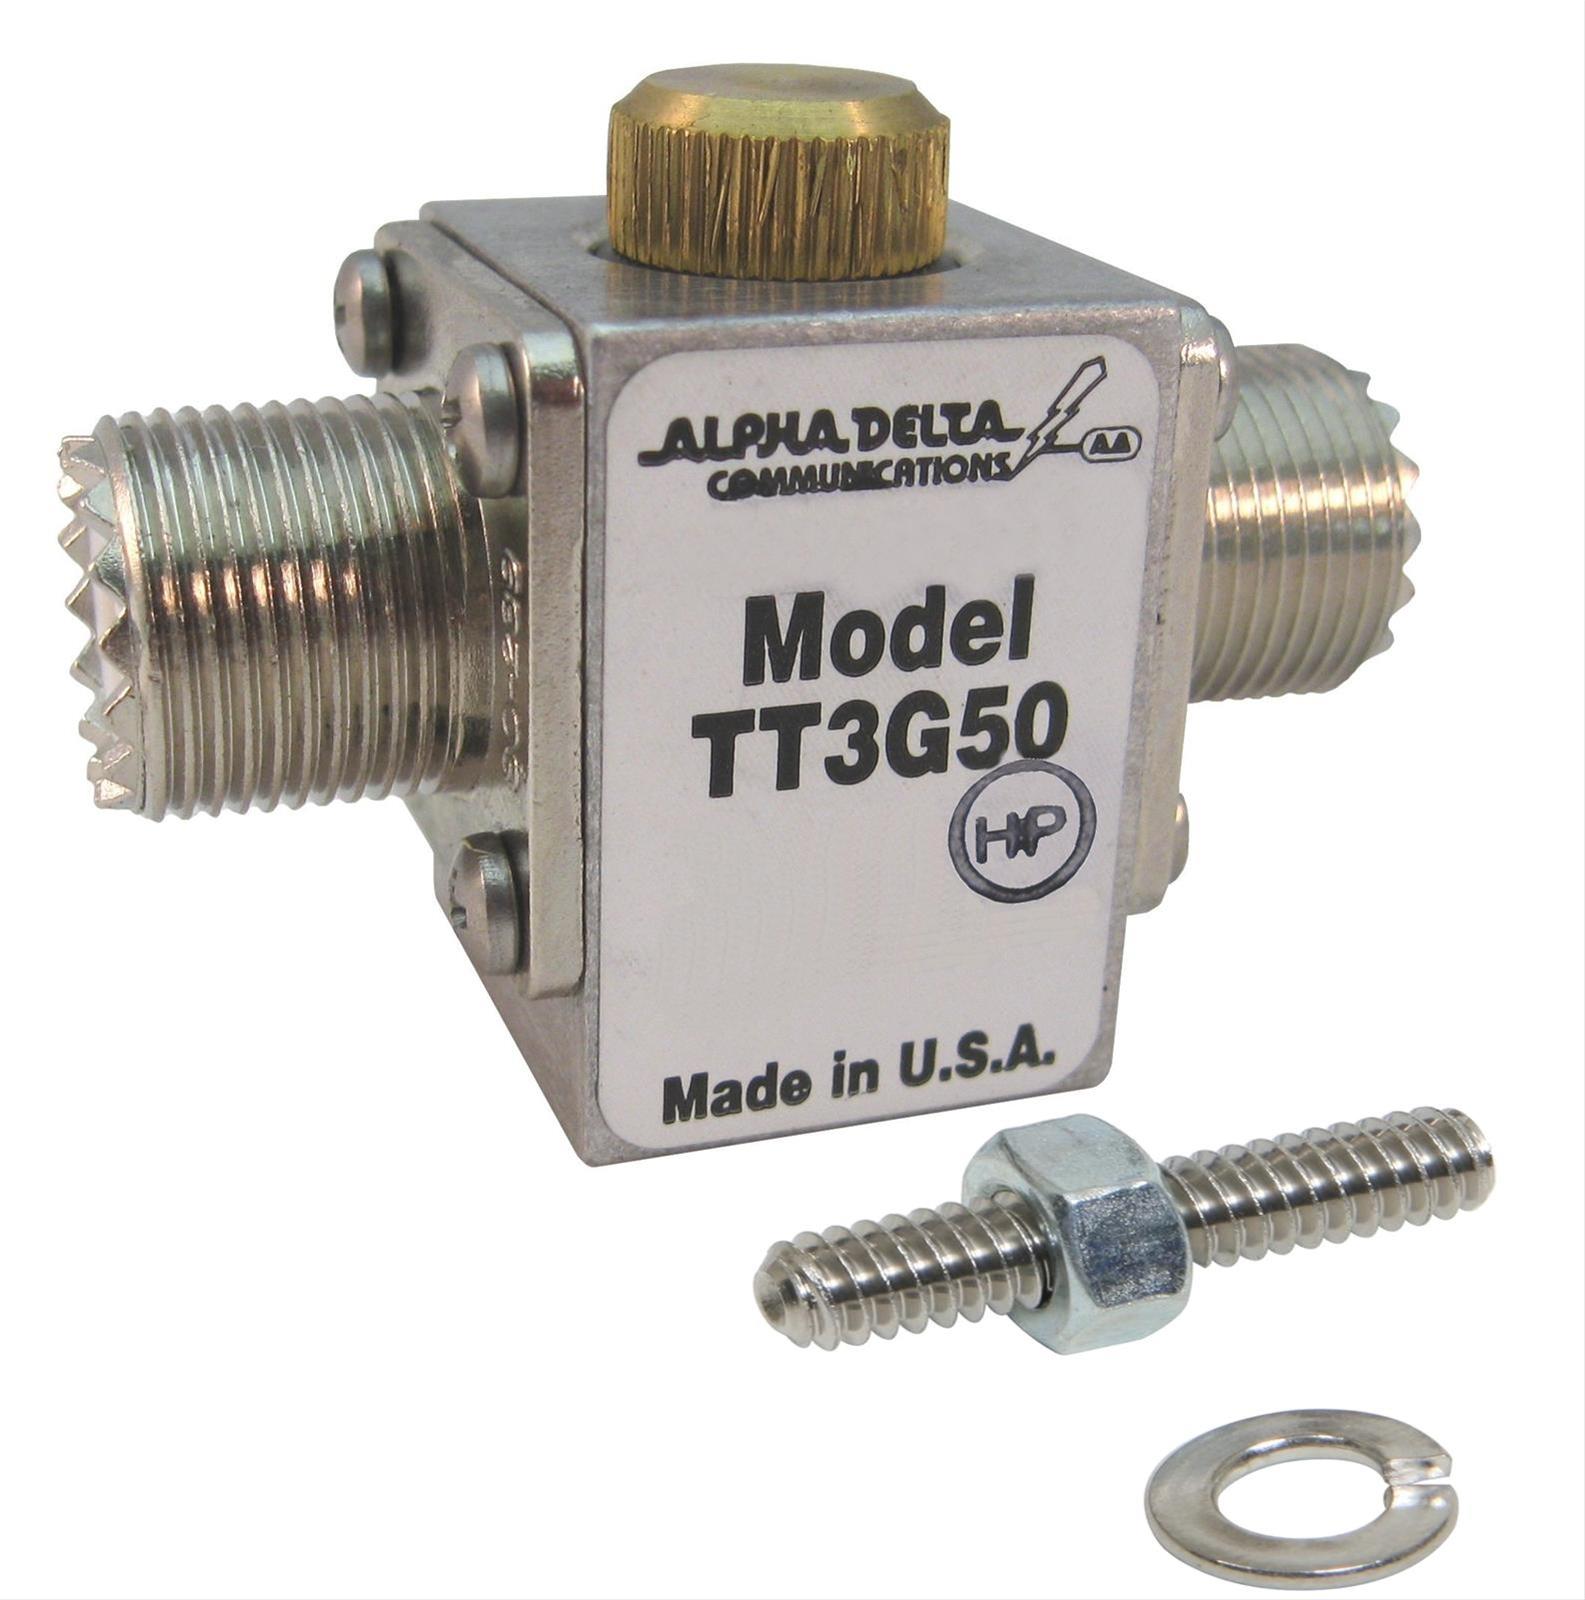 ATT3G50UB Bulkhead connector 3/4 in 